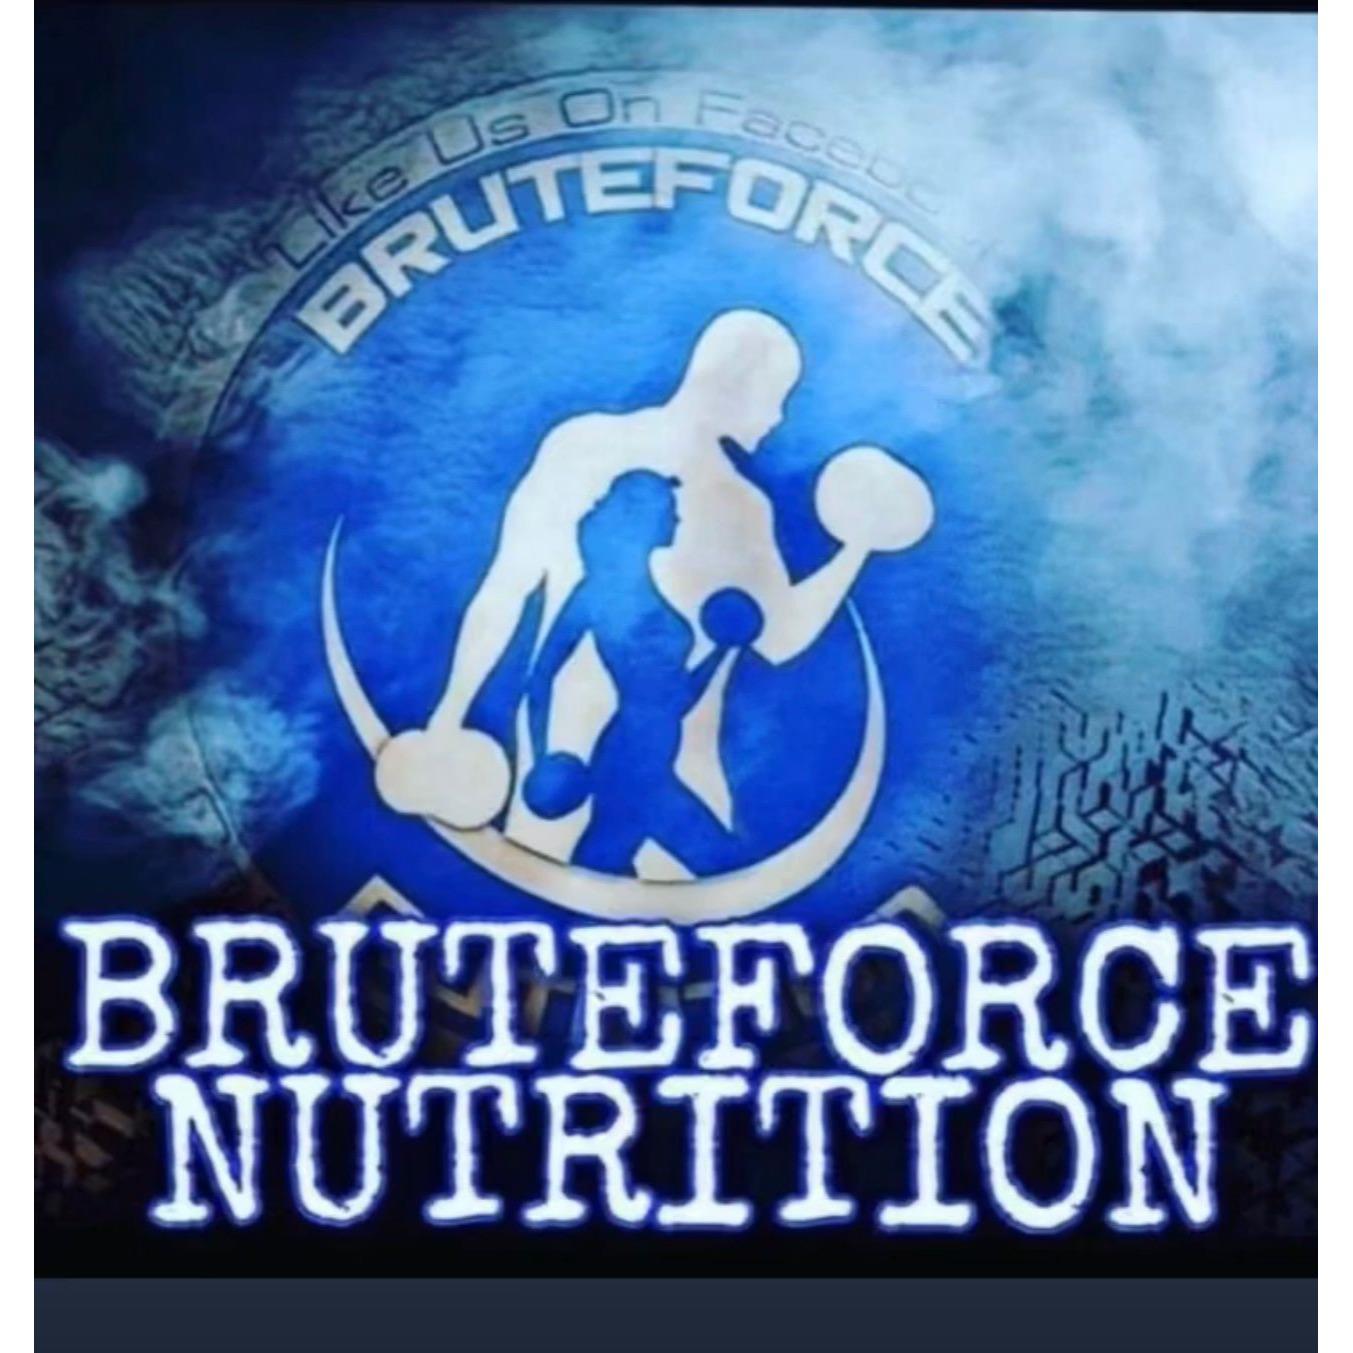 Bruteforce Nutrition 1